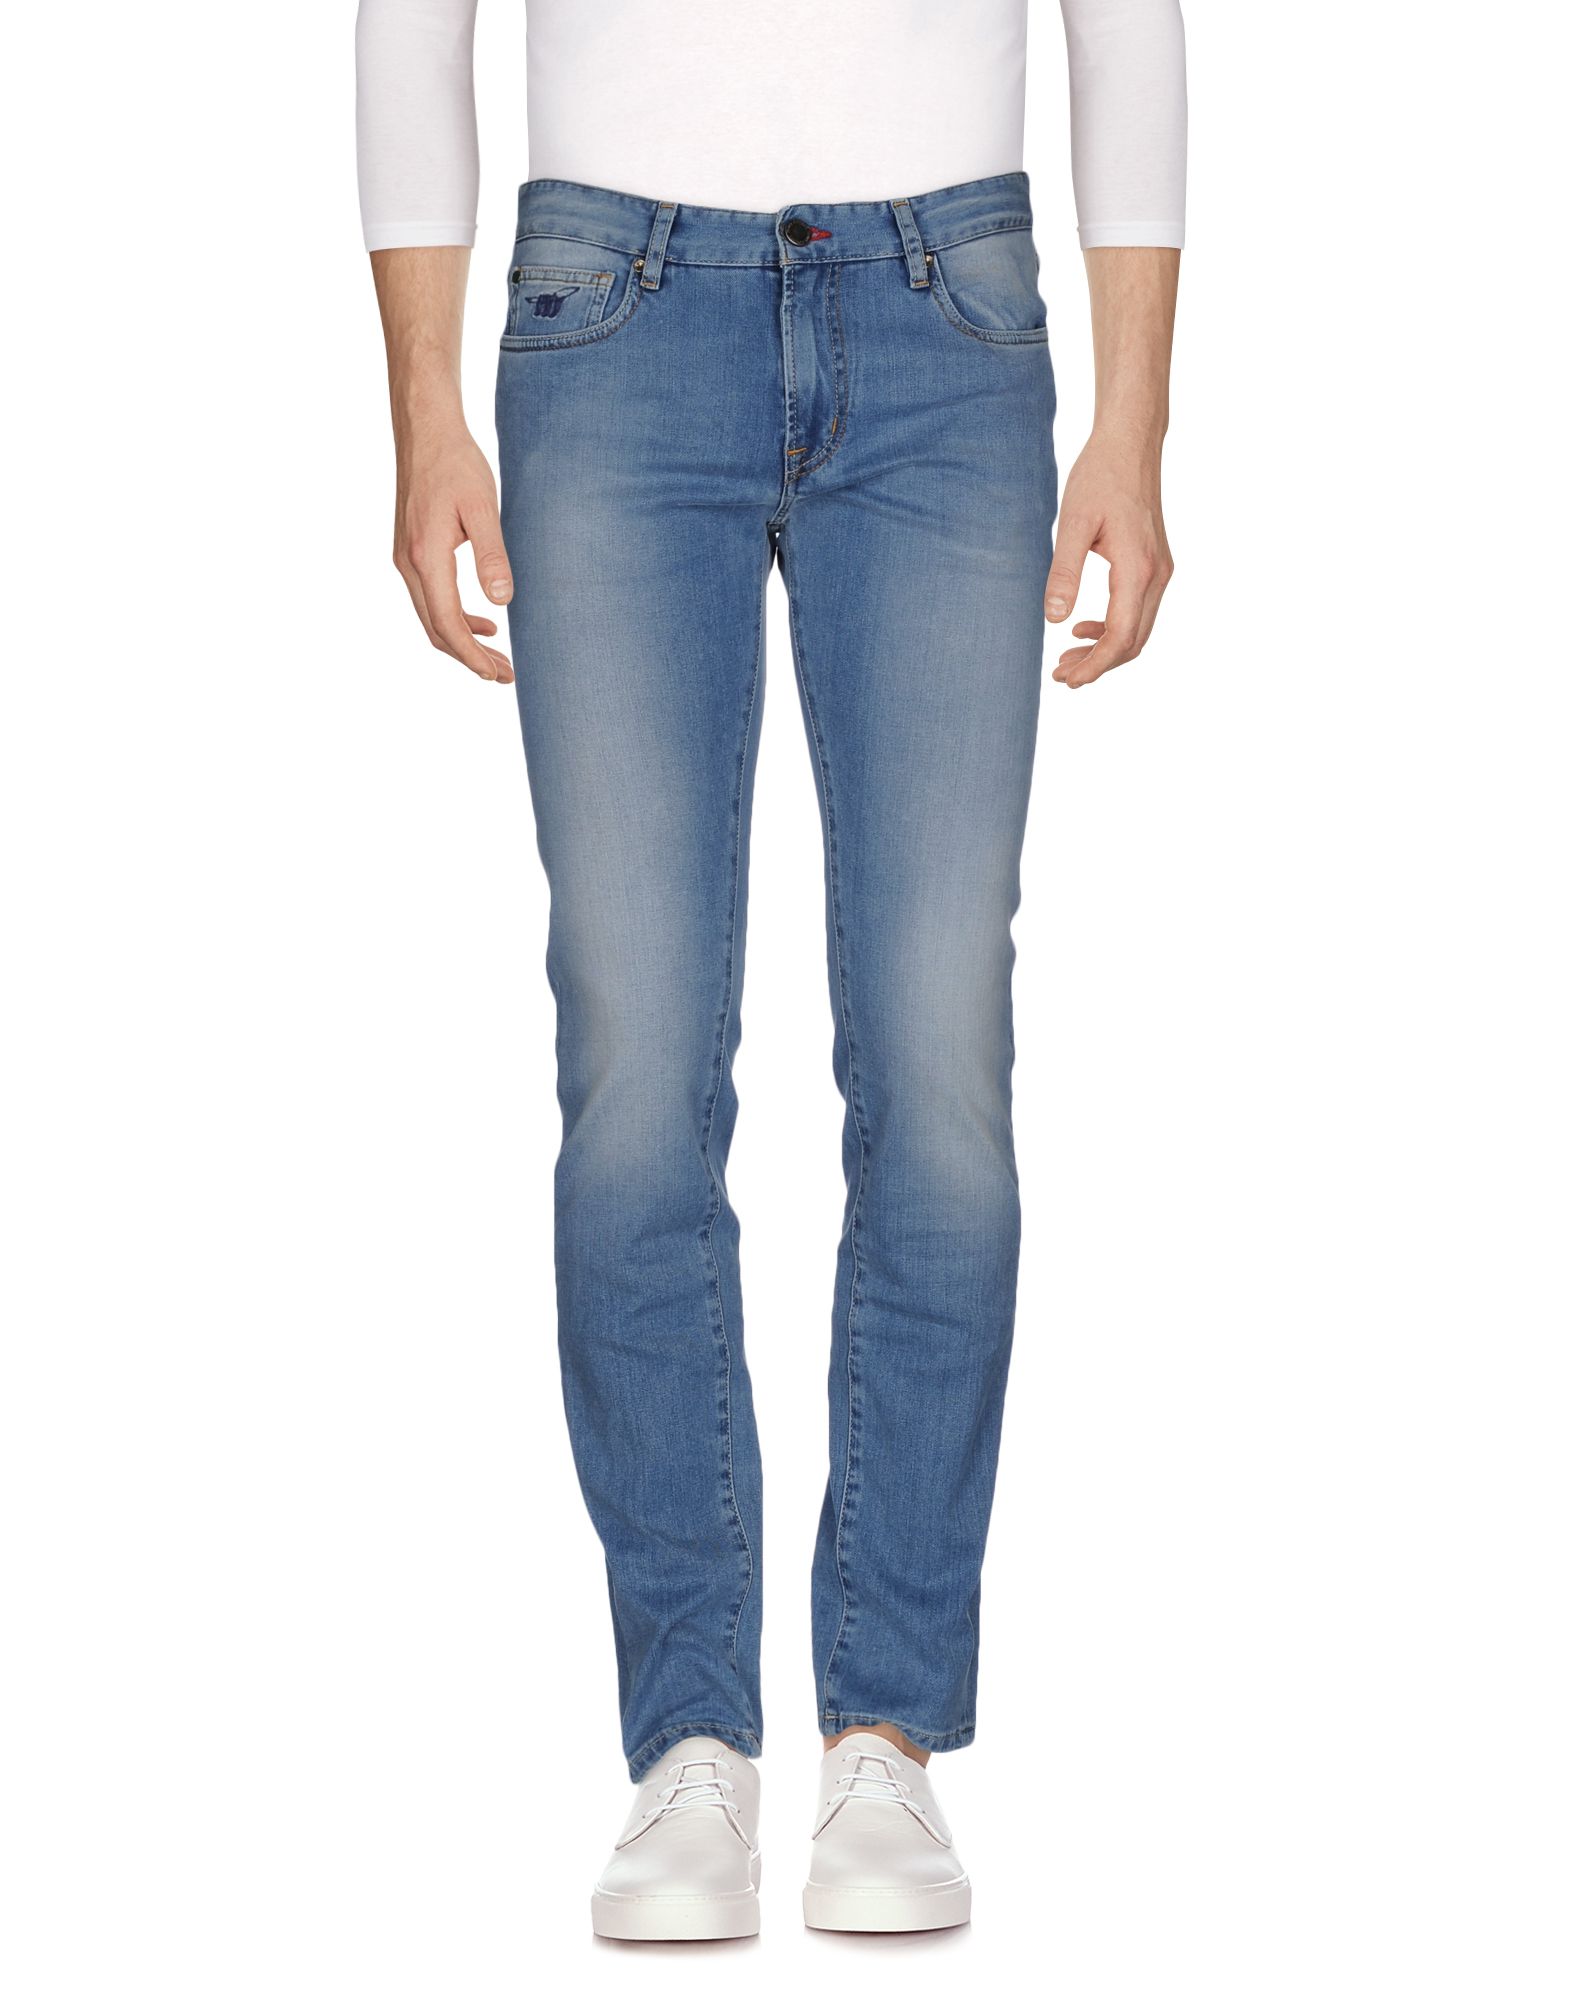 HENRY COTTON'SHENRY COTTON'S Jeans | DailyMail